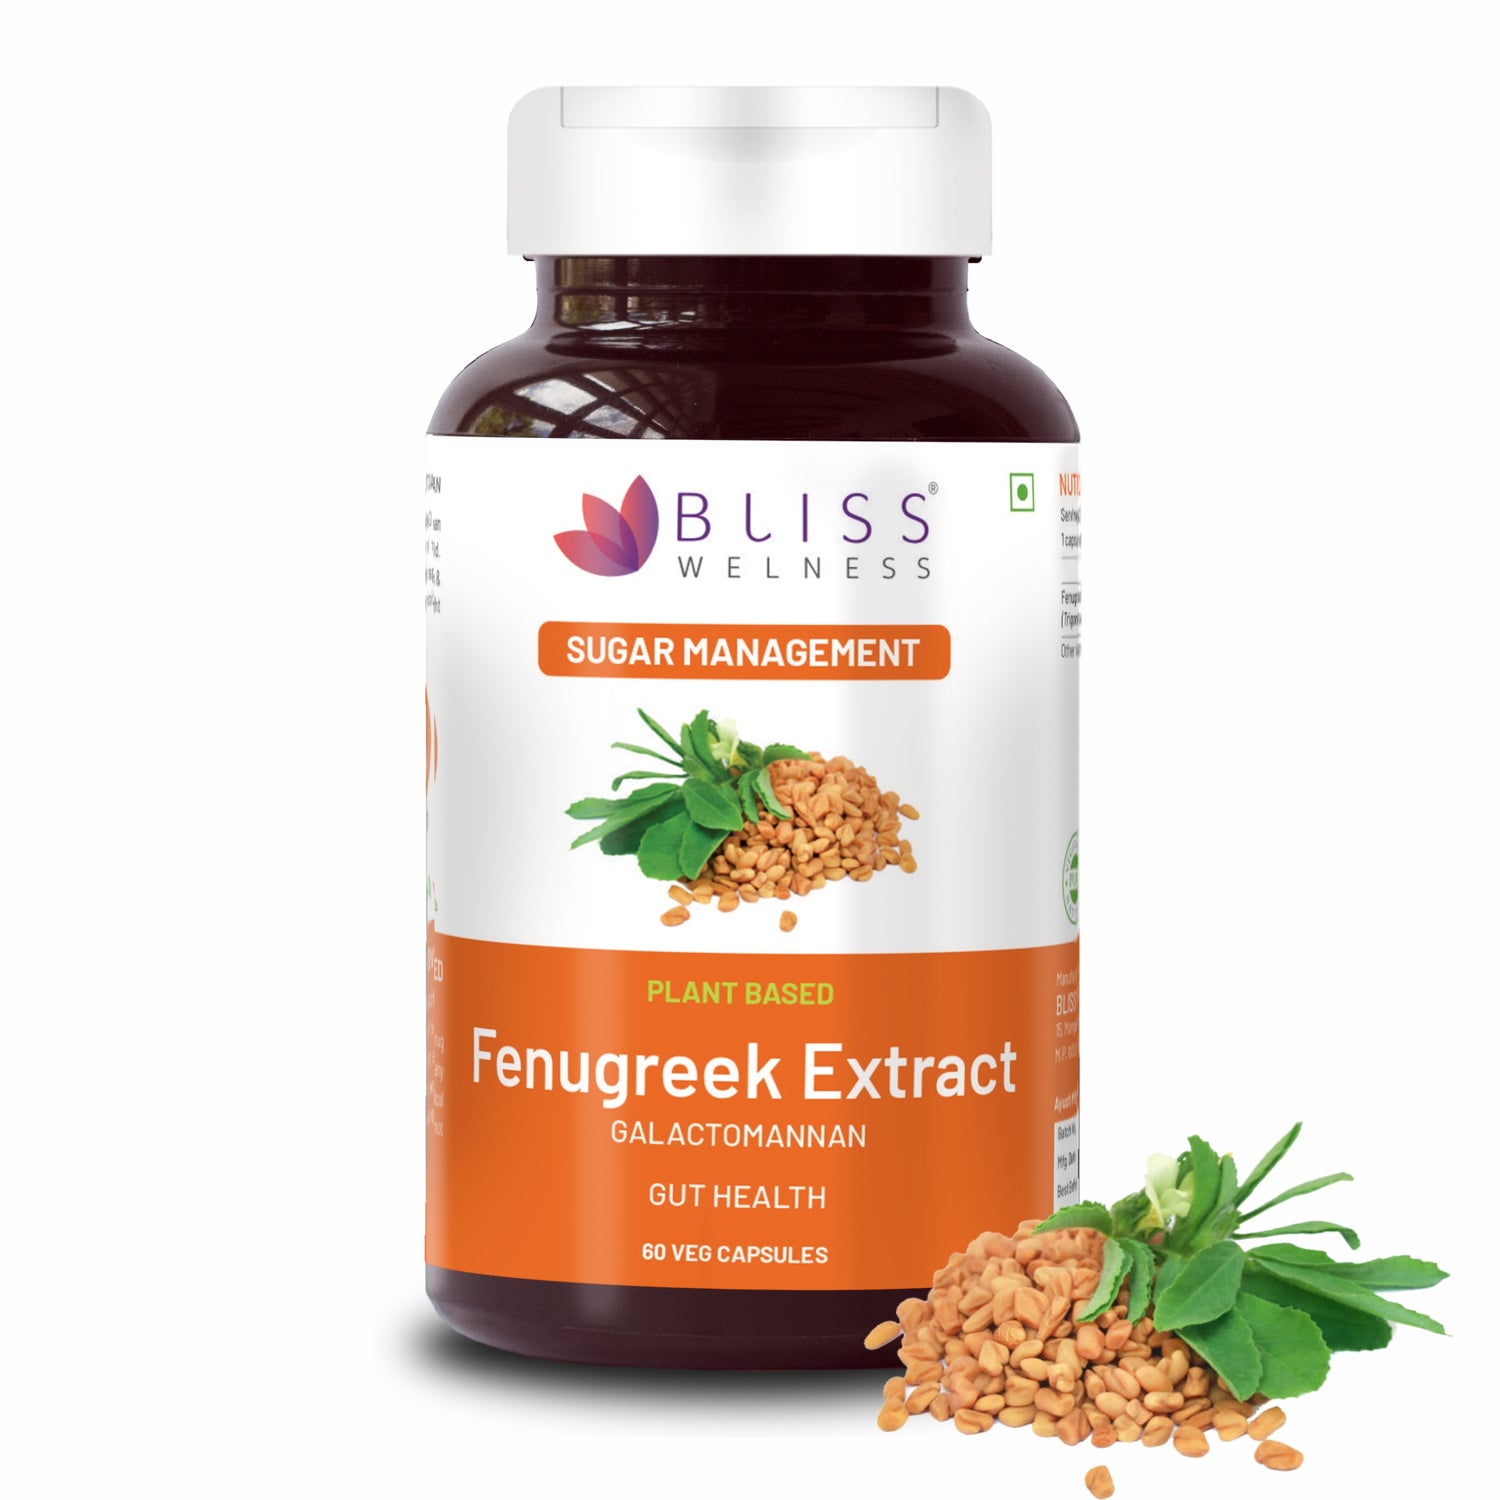 Bliss Welness Pure Sugar & Weight Management | Fenugreek Seed Extract 1000mg Galactomannan Fiber | Gut Metabolism Health Supplement - 60 Vegetarian Capsules